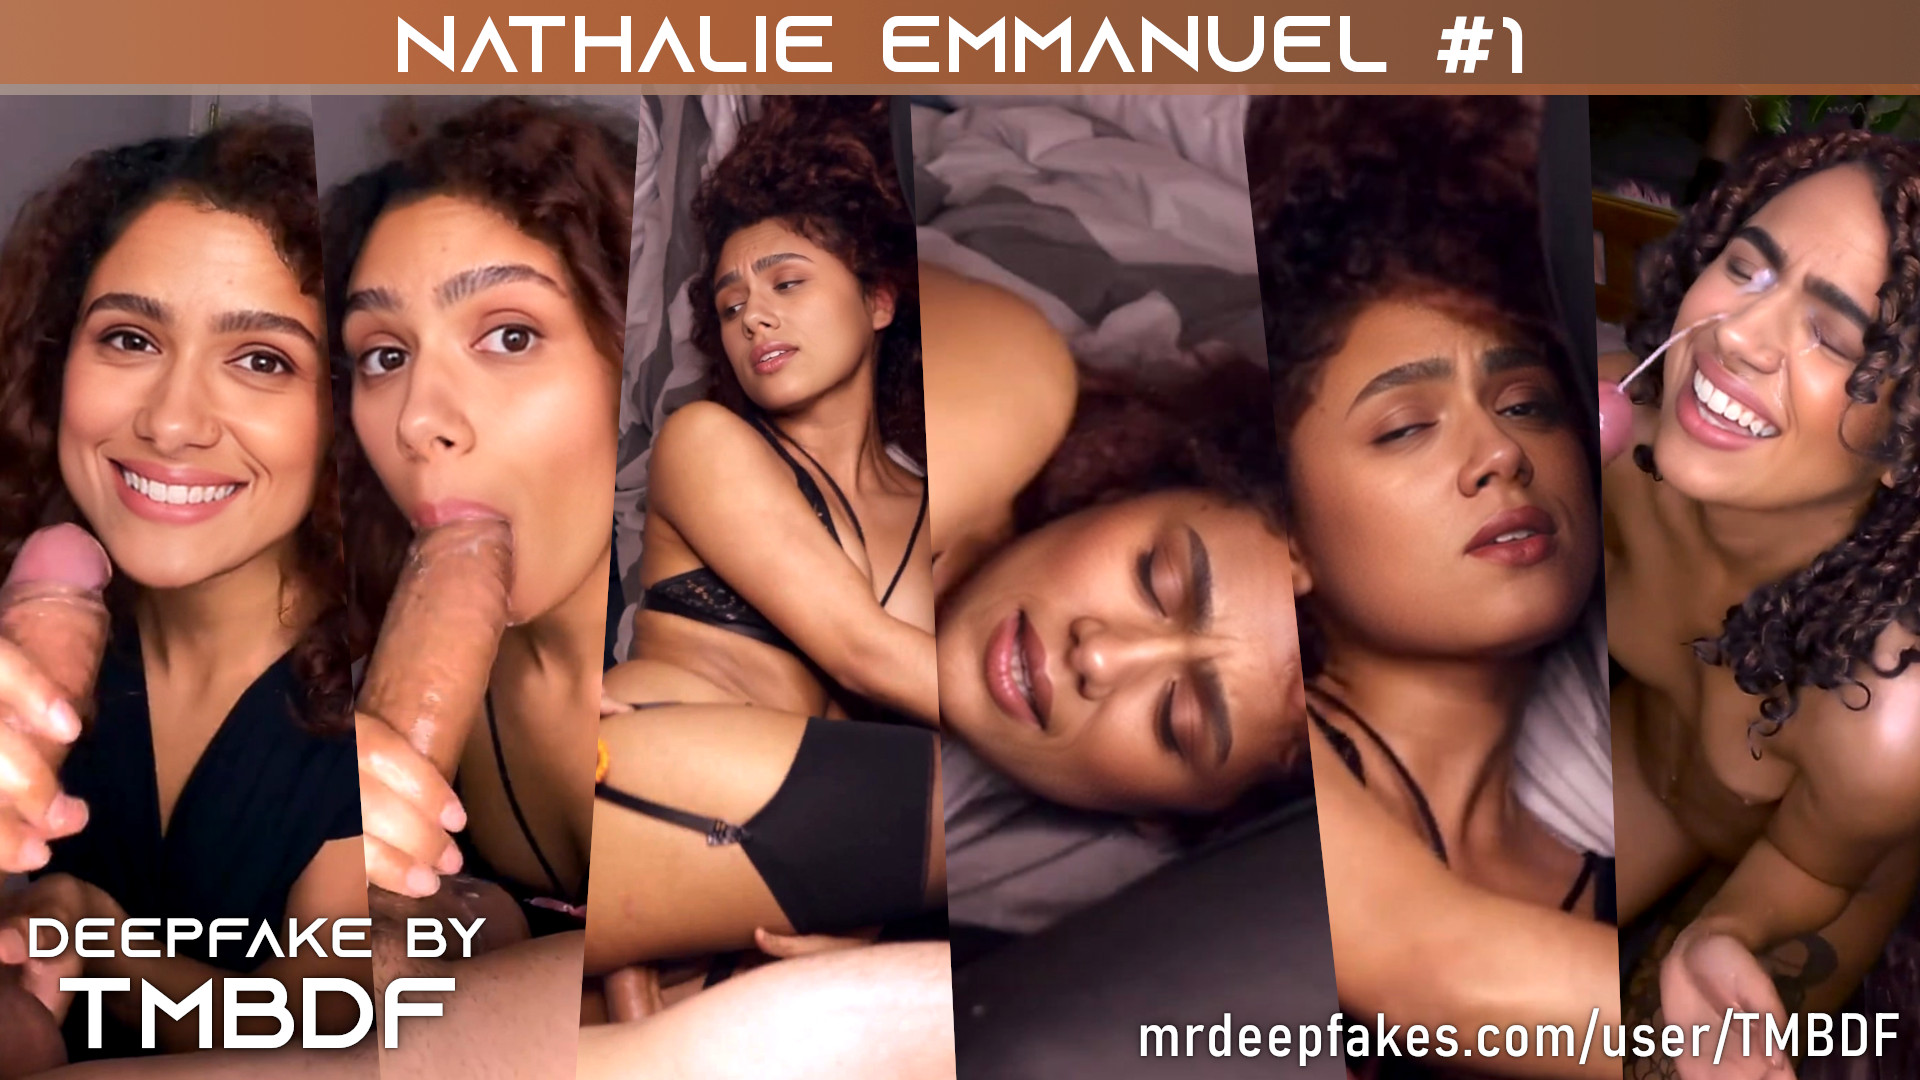 Xxl 2018 Sex Video - Nathalie Emmanuel #1 - POV BJ, SEX AND FACIAL | PREVIEW | Full ver. in video  details DeepFake Porn - MrDeepFakes